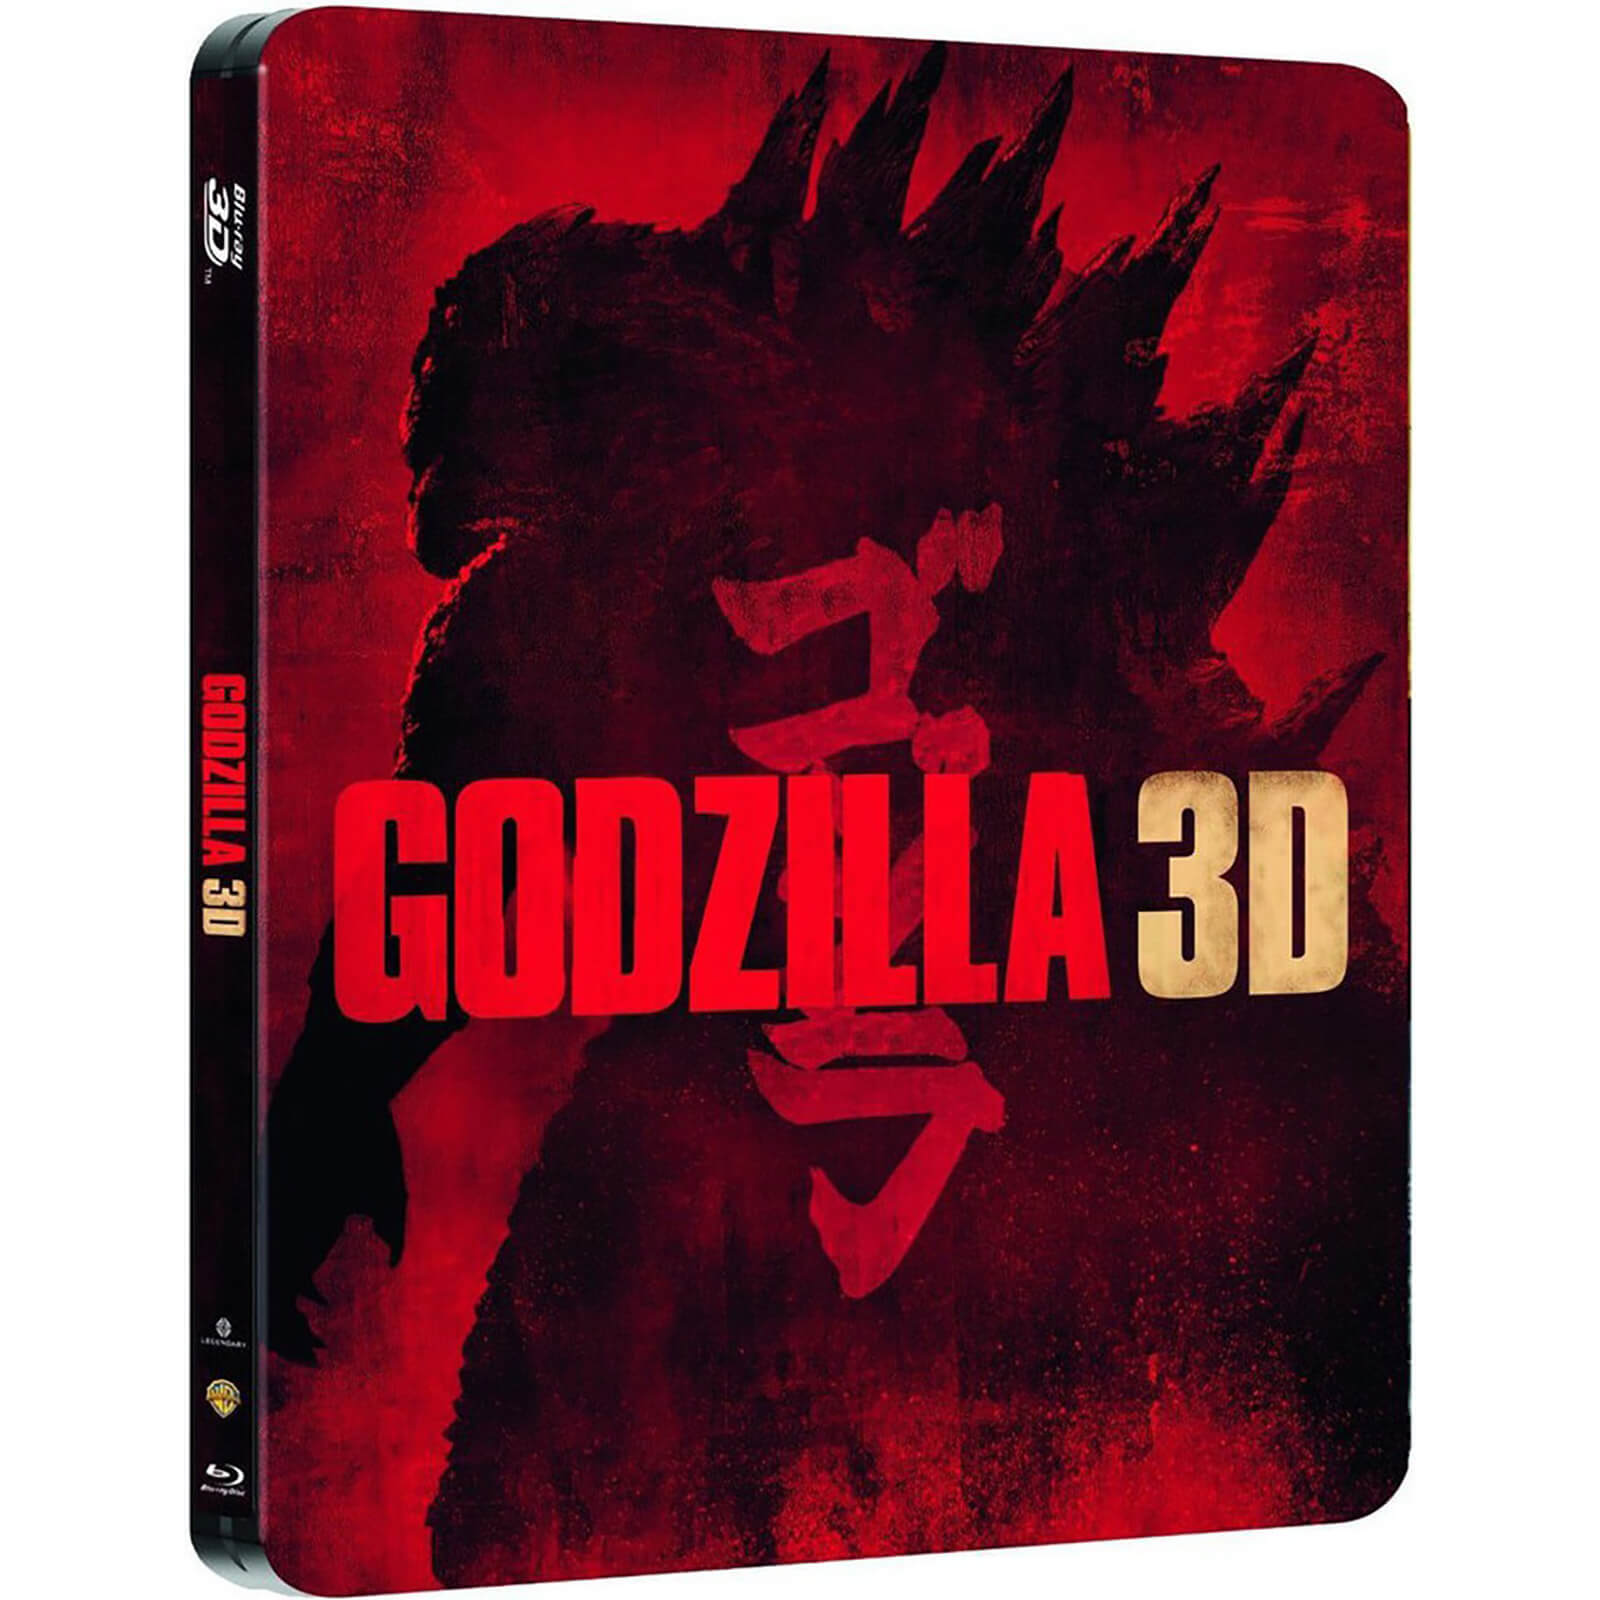 Godzilla 3D - Limited Edition Steelbook